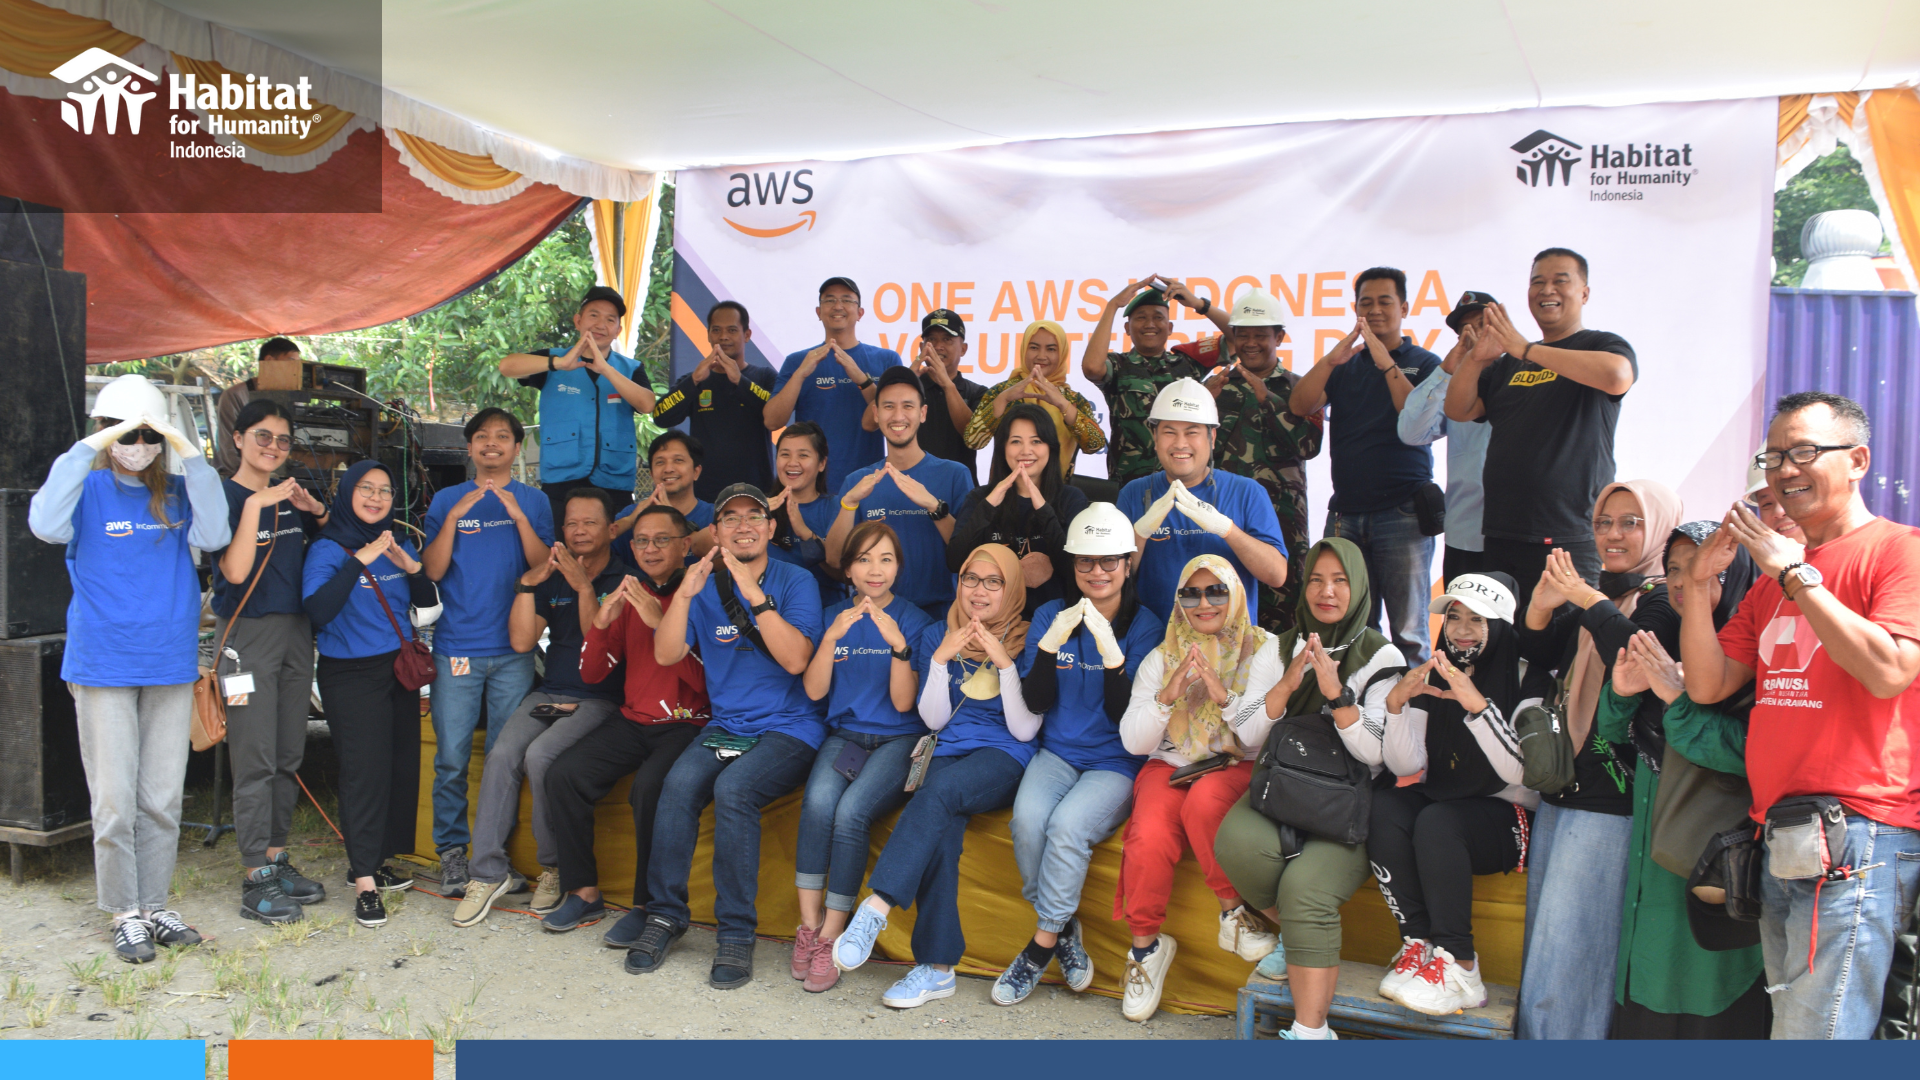 One Amazon Web Services Indonesia Volunteering day